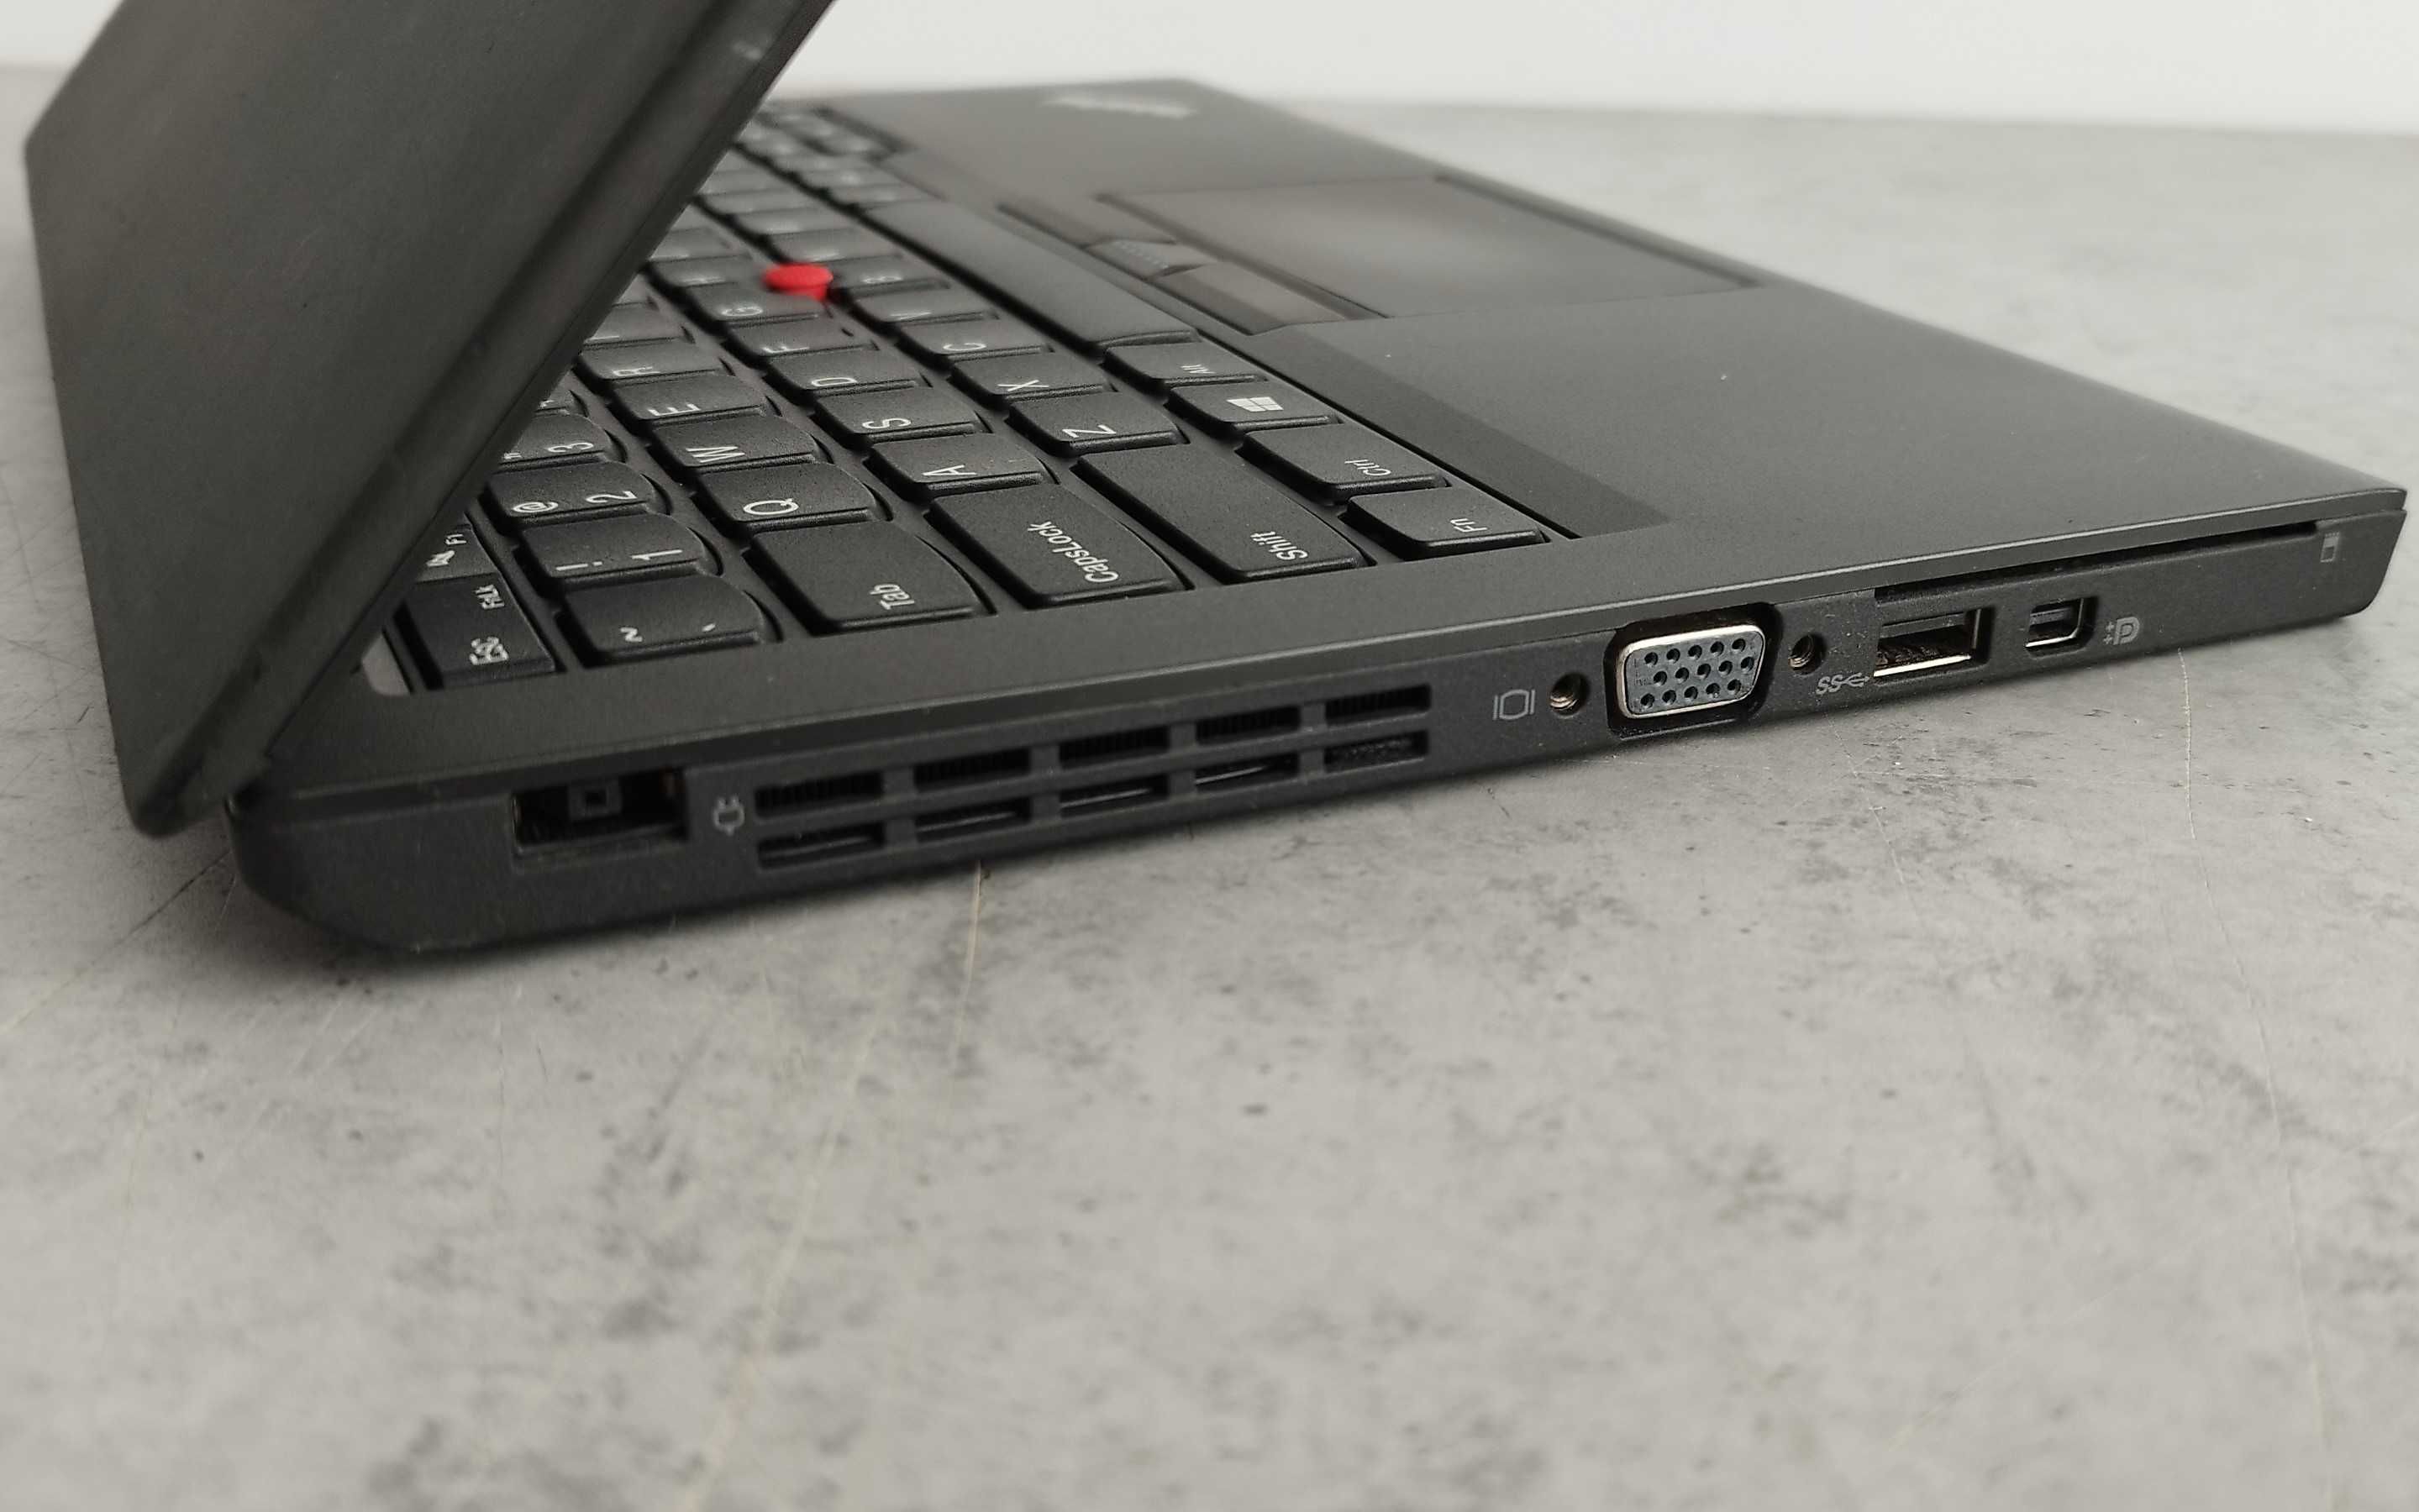 Laptop LENOVO X250 12,5 " Intel Core i5|4 GB|750 GB czarny| BATERIA OK